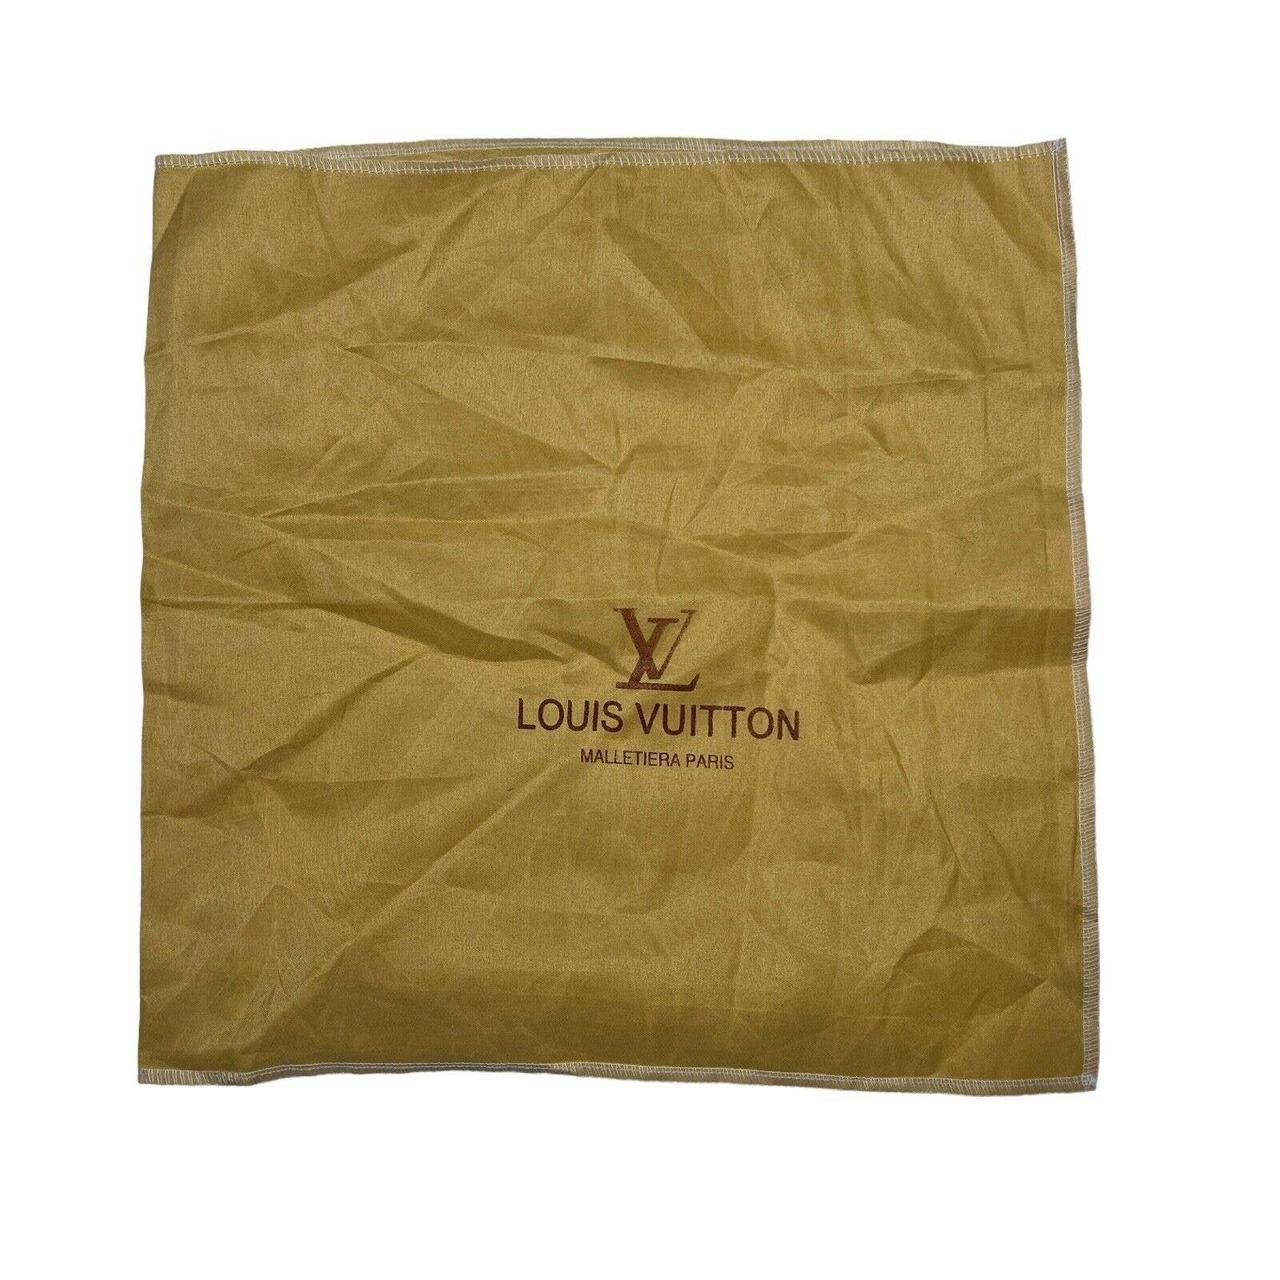 Vintage Louis Vuitton Malletiera Paris Soft Cloth Drawstring Dustbag 7” by  10”